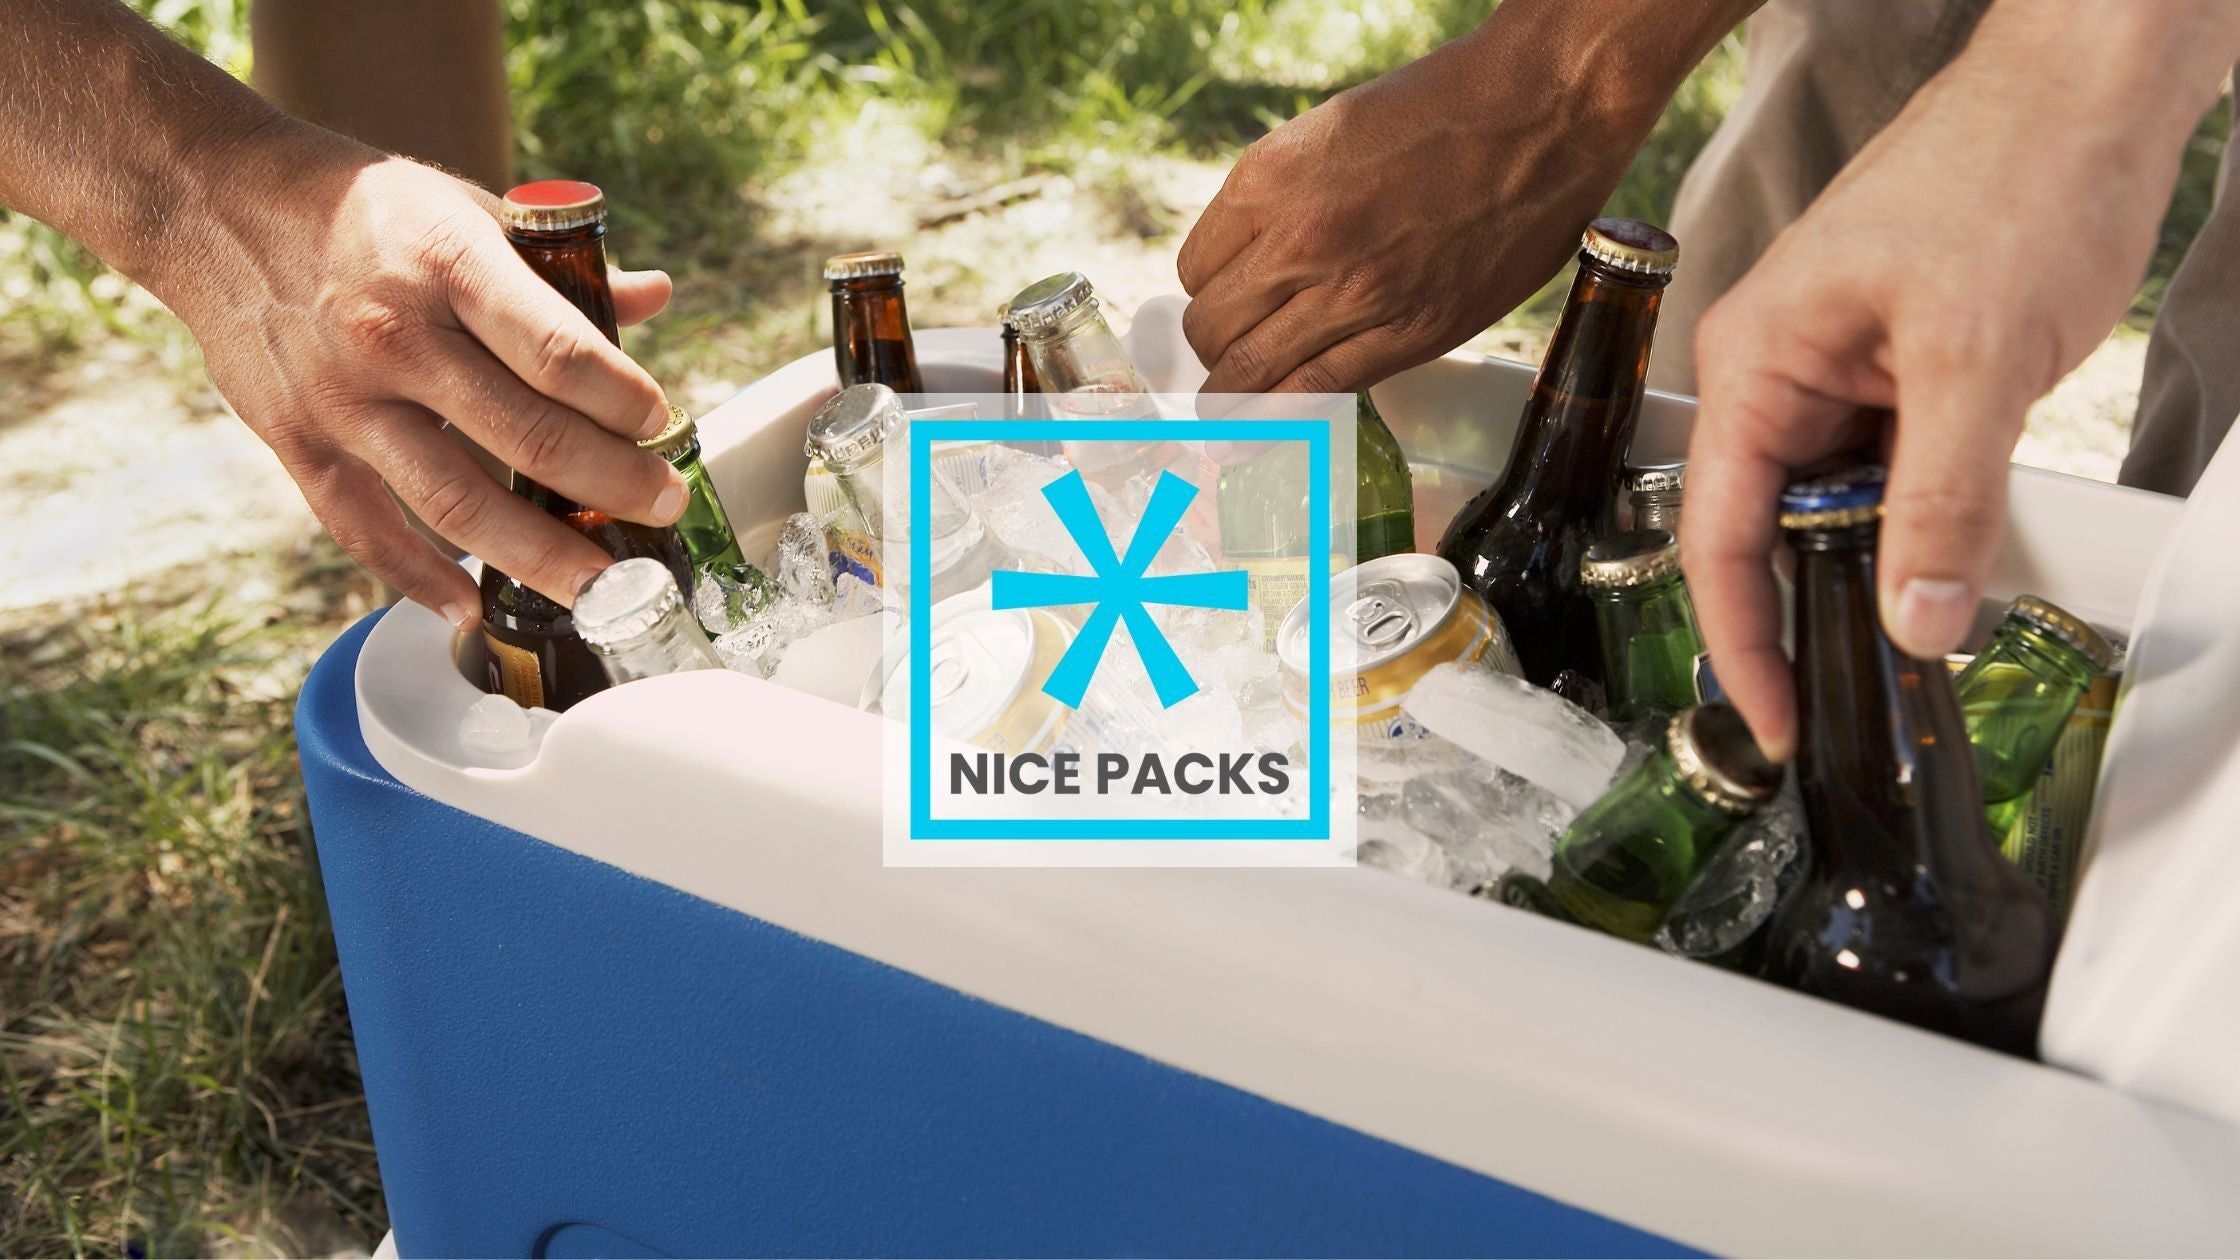 SUNLUG Cooler Ice Packs Reusable Ice Packs for Coolers Long Lasting Freezer  Packs